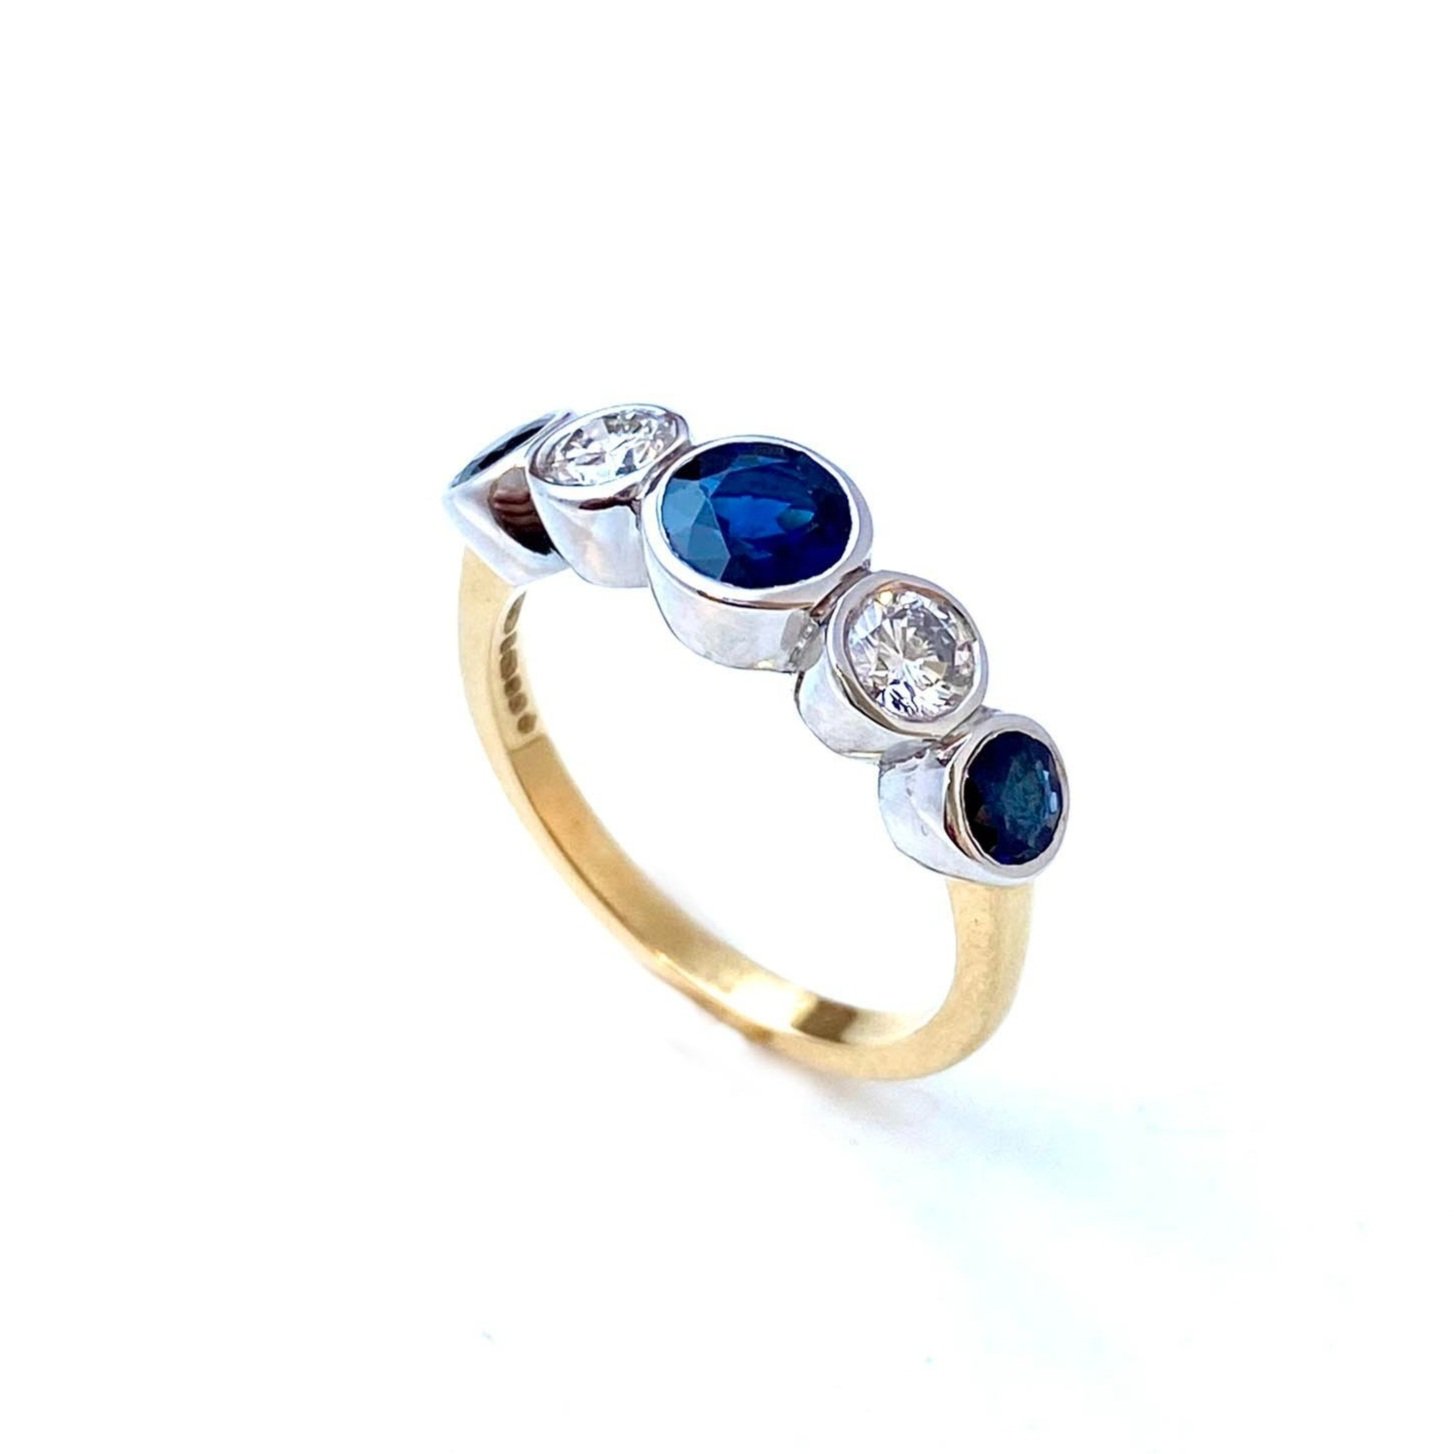 Madagascar blue sapphire engagement ring